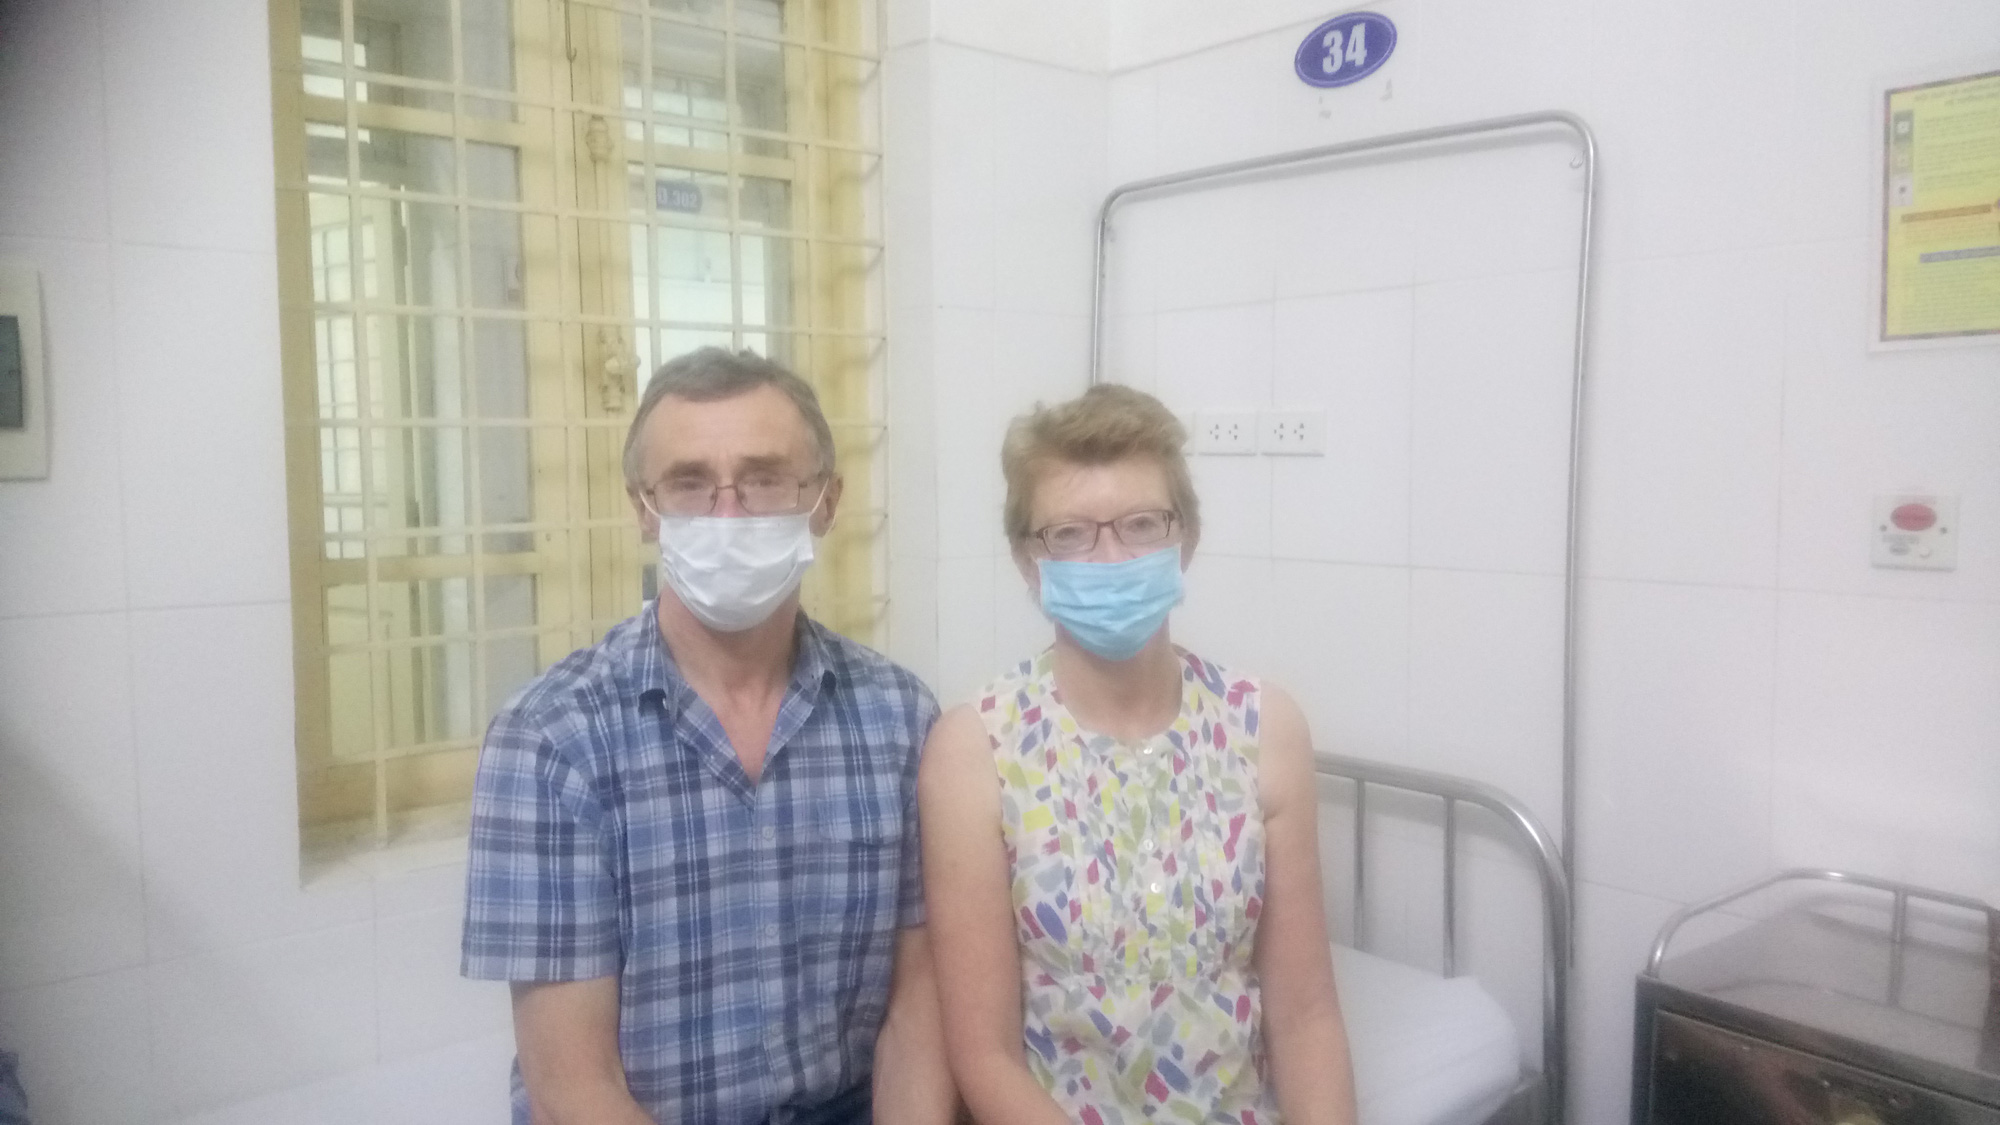 British couple praises quarantine condition at Hanoi hospital in thank-you letter